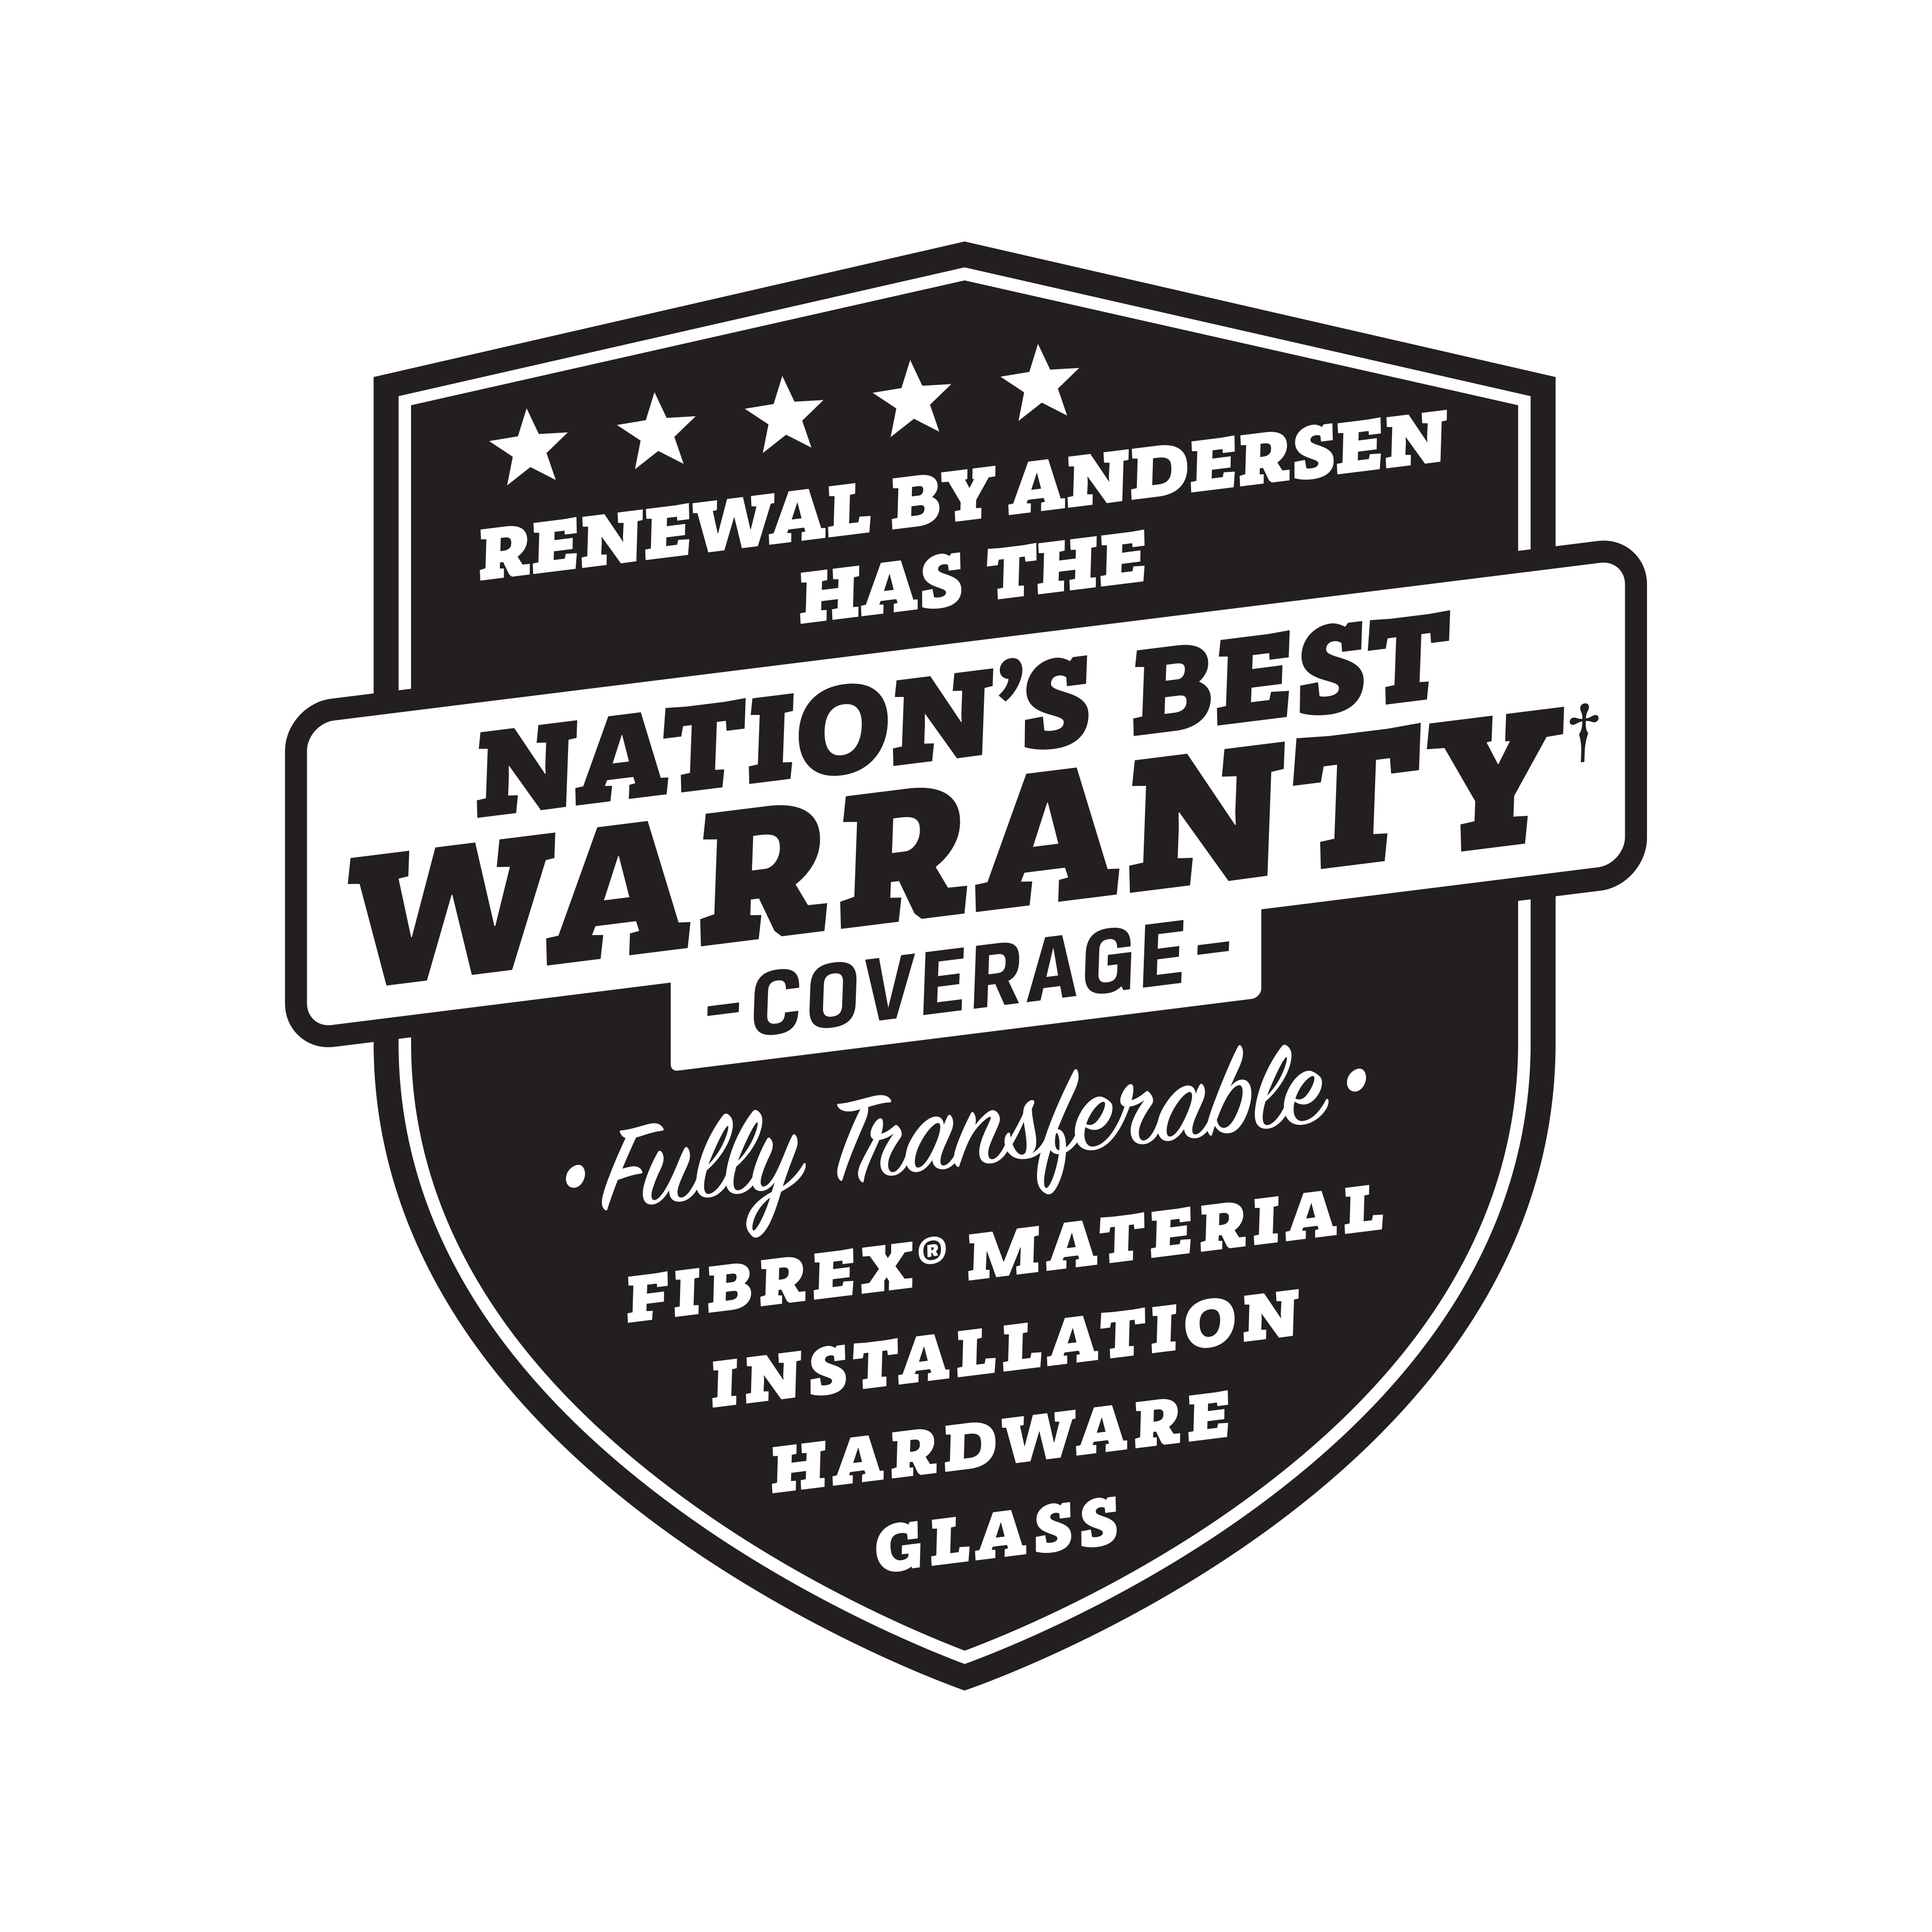 warranty information - renewal by andersen